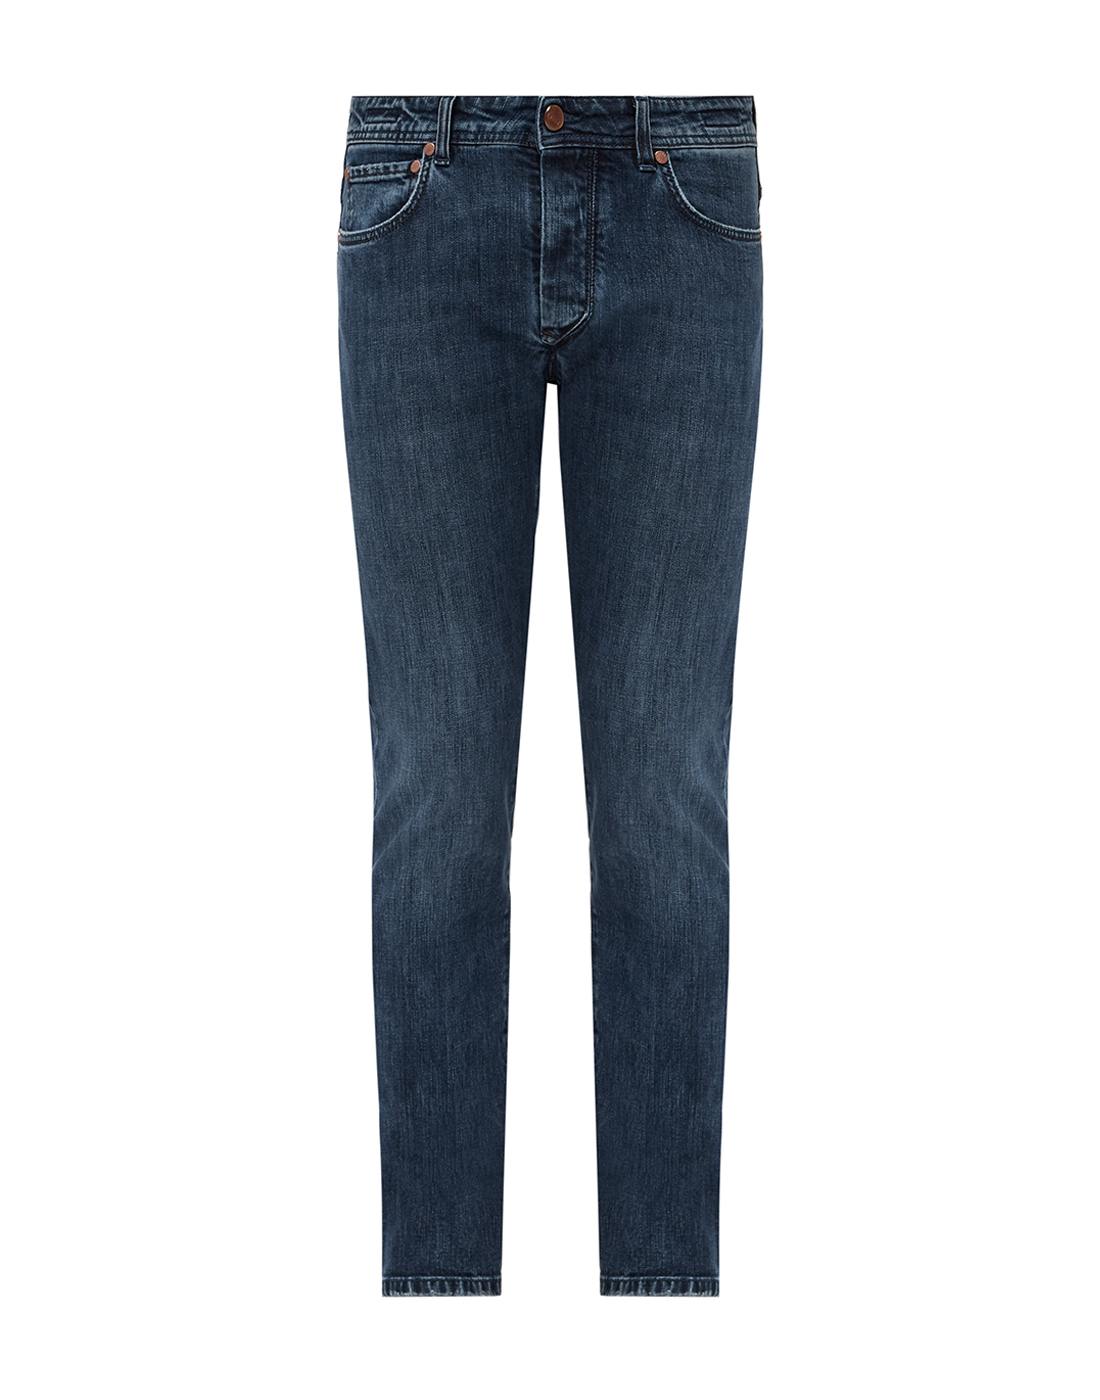 Мужские синие джинсы Barba SJFIVE 11162-1